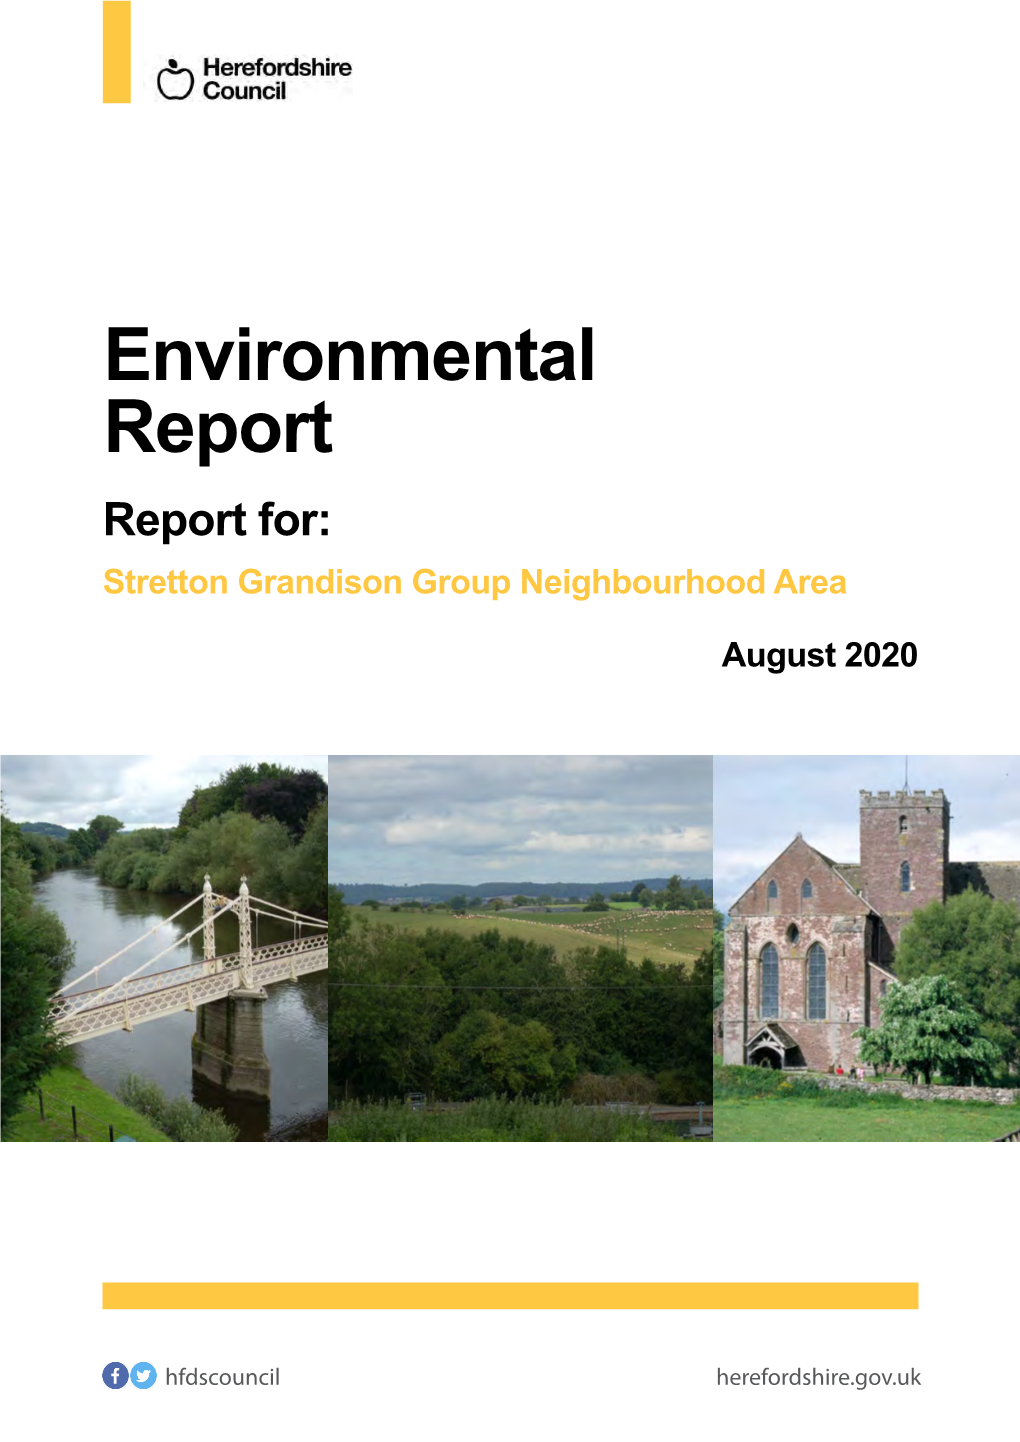 Stretton Grandison Group Environmental Report August 2020